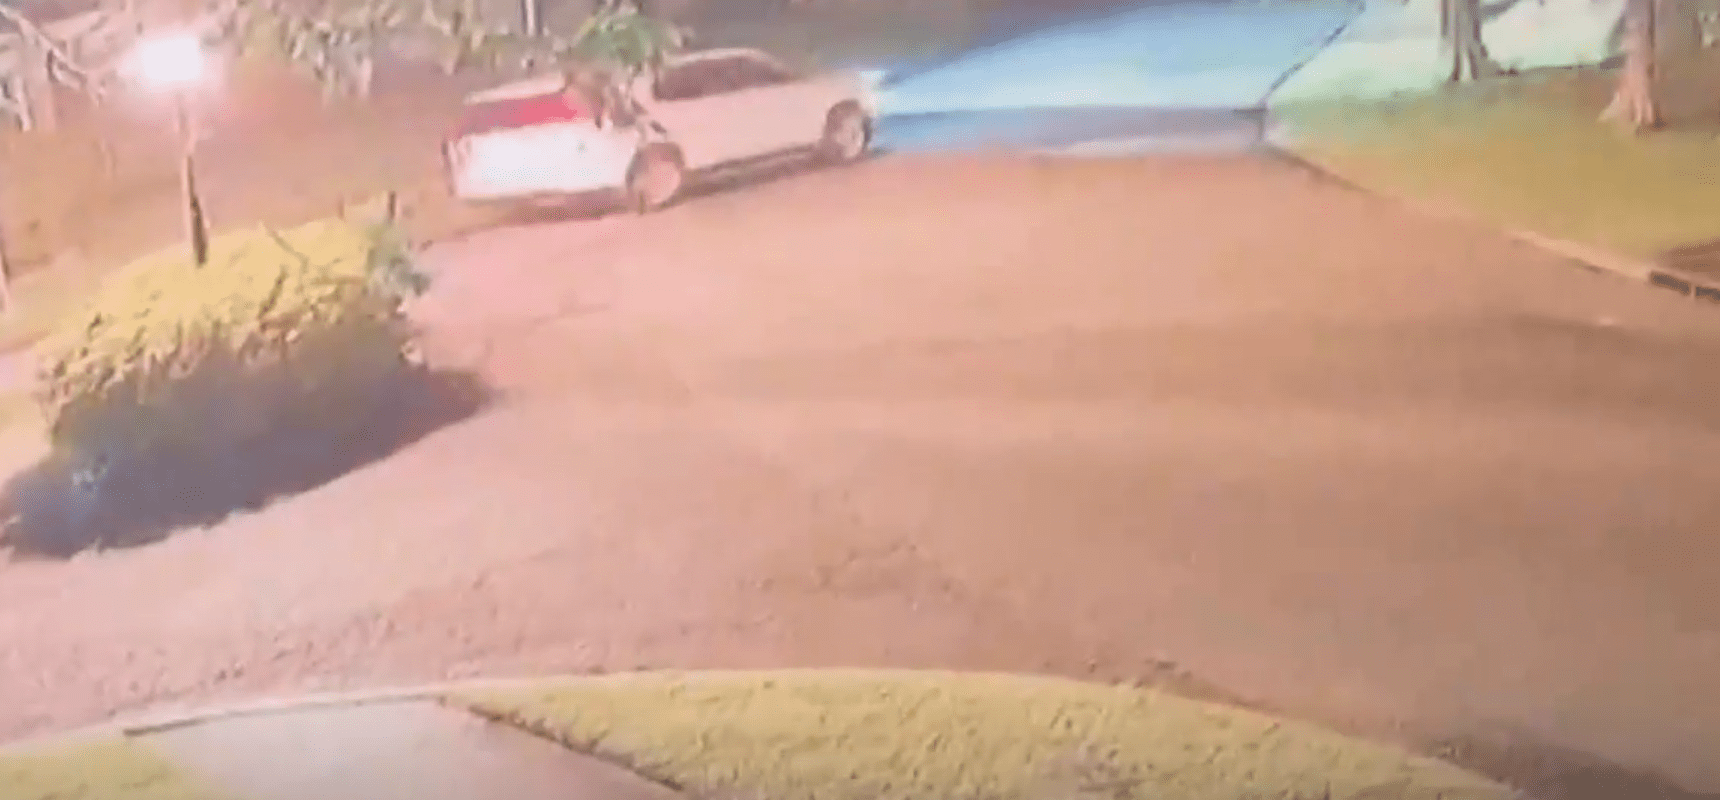 Car being stolen caught on surveillance camera. | Source: WBRZ-TV